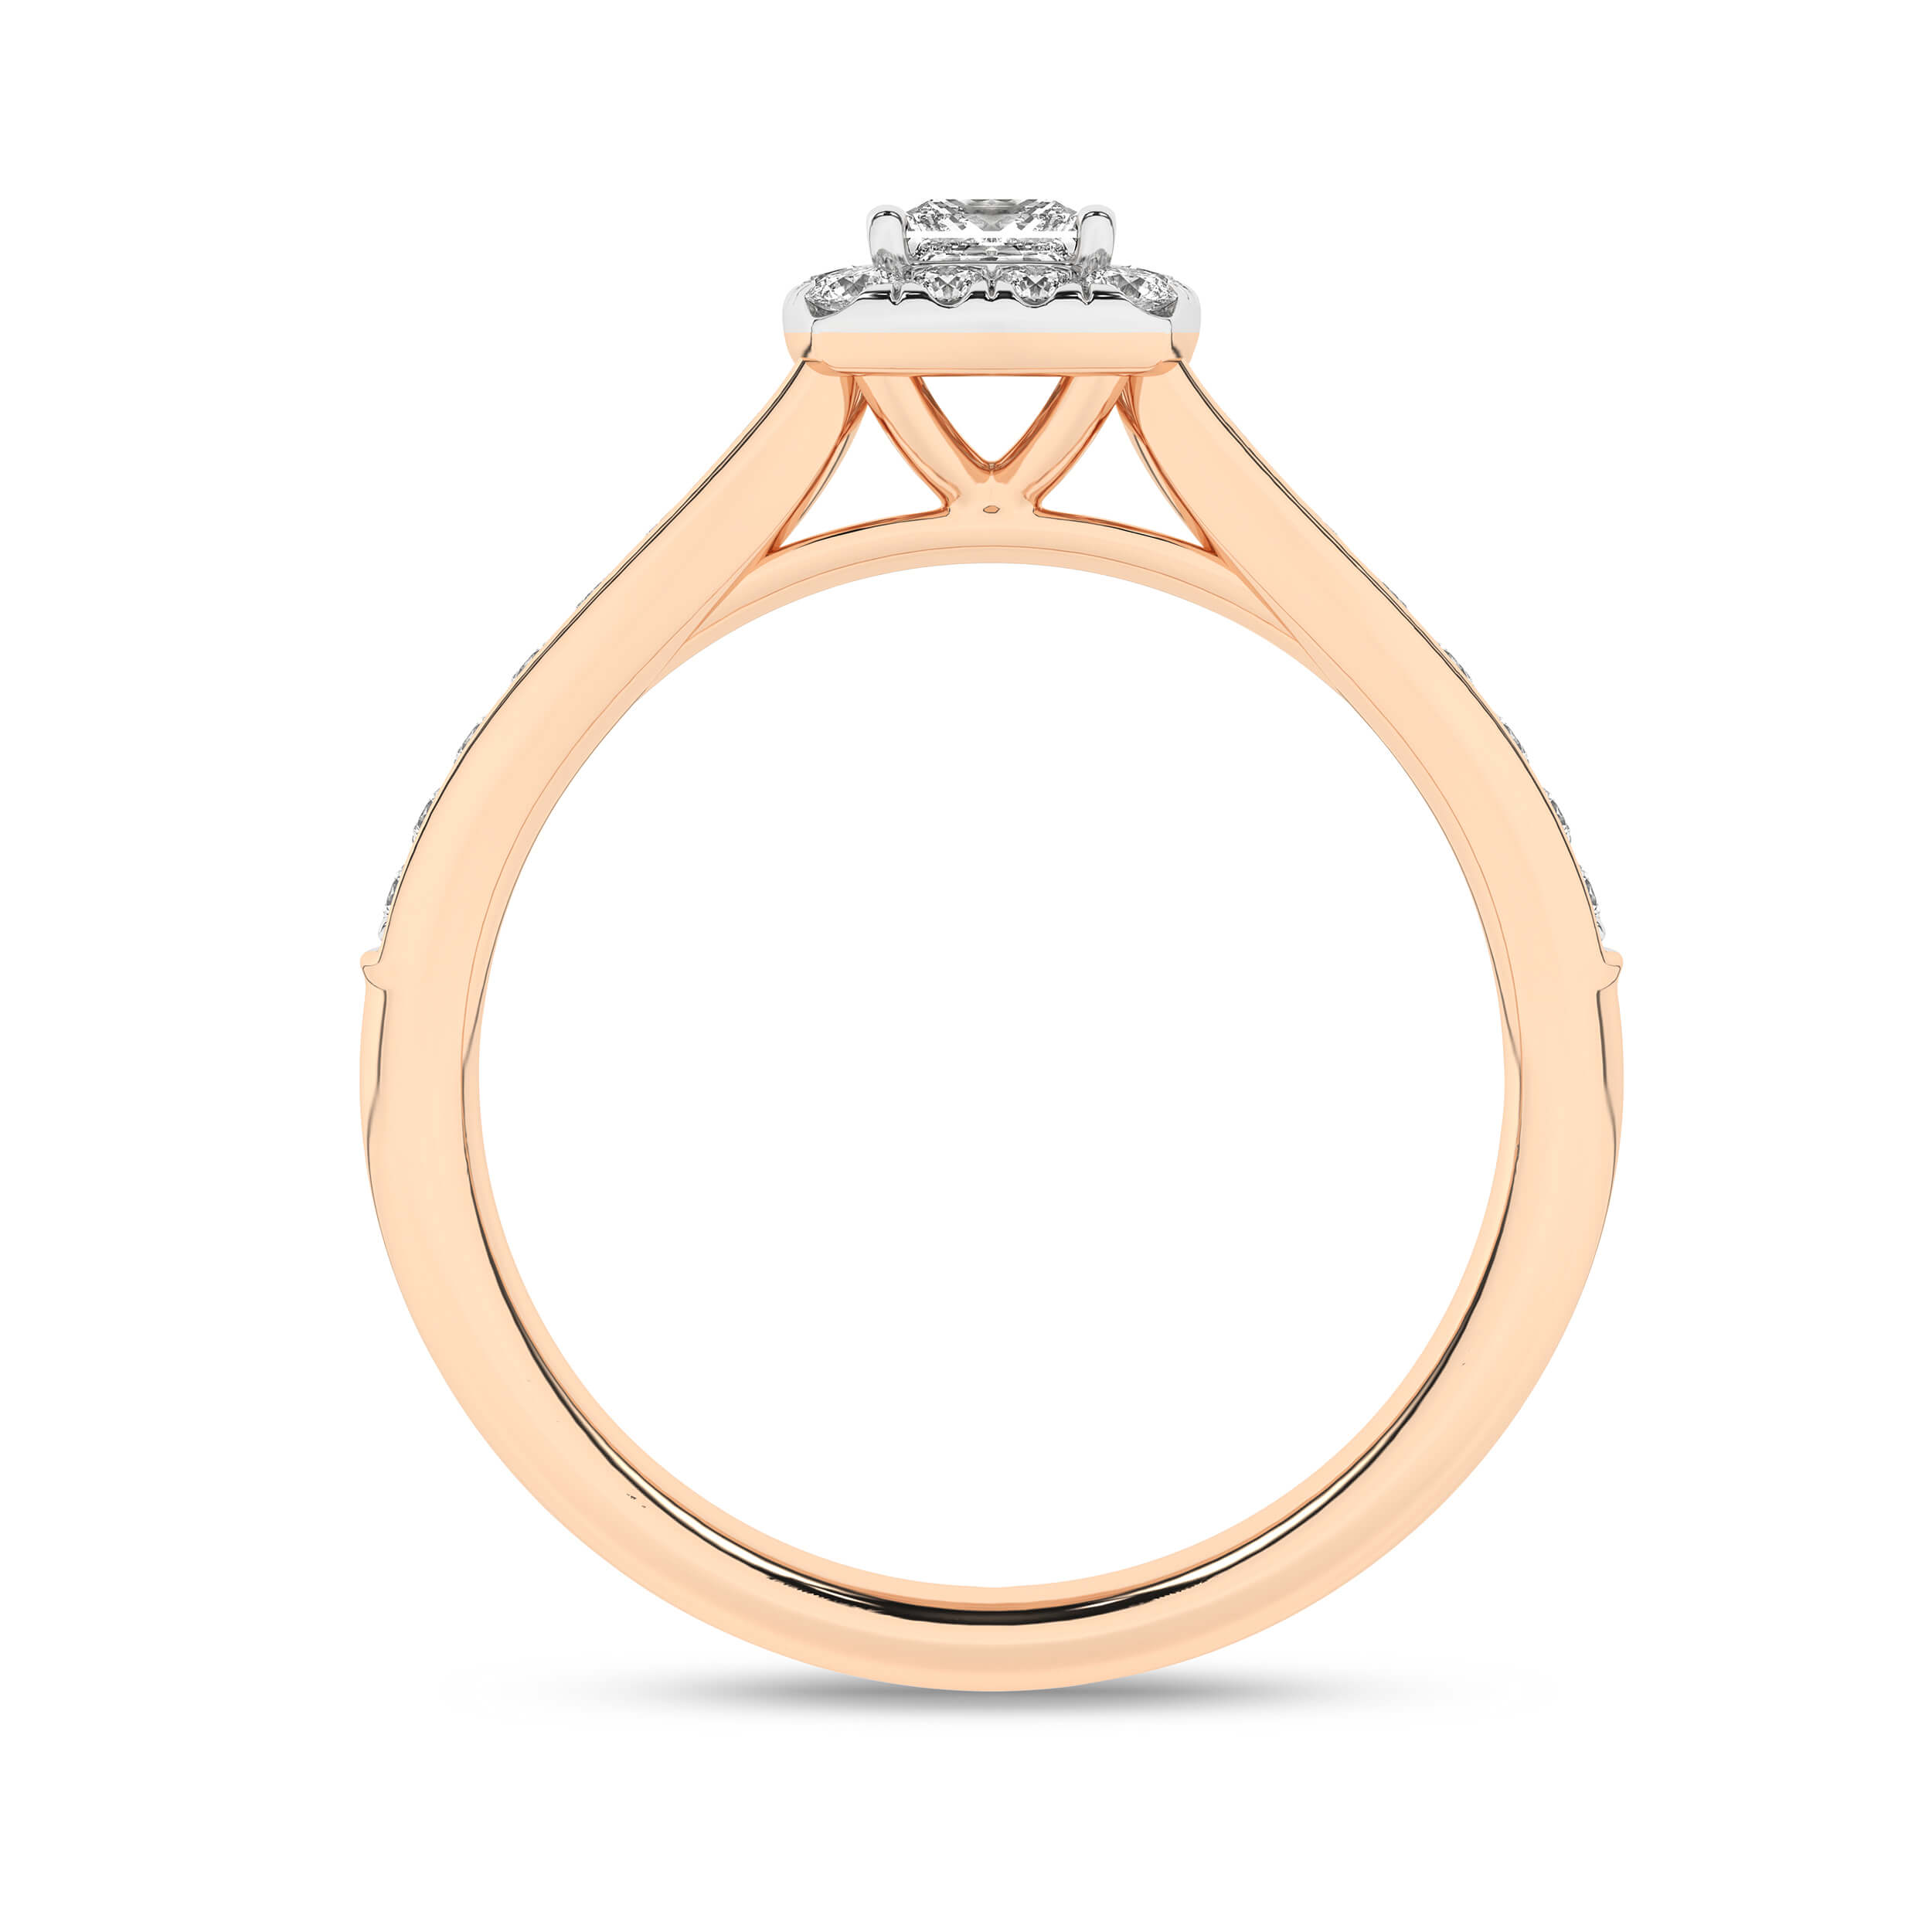 Inel de logodna din Aur Roz 14K cu Diamante 0.50Ct, articol RB17644EG, previzualizare foto 2